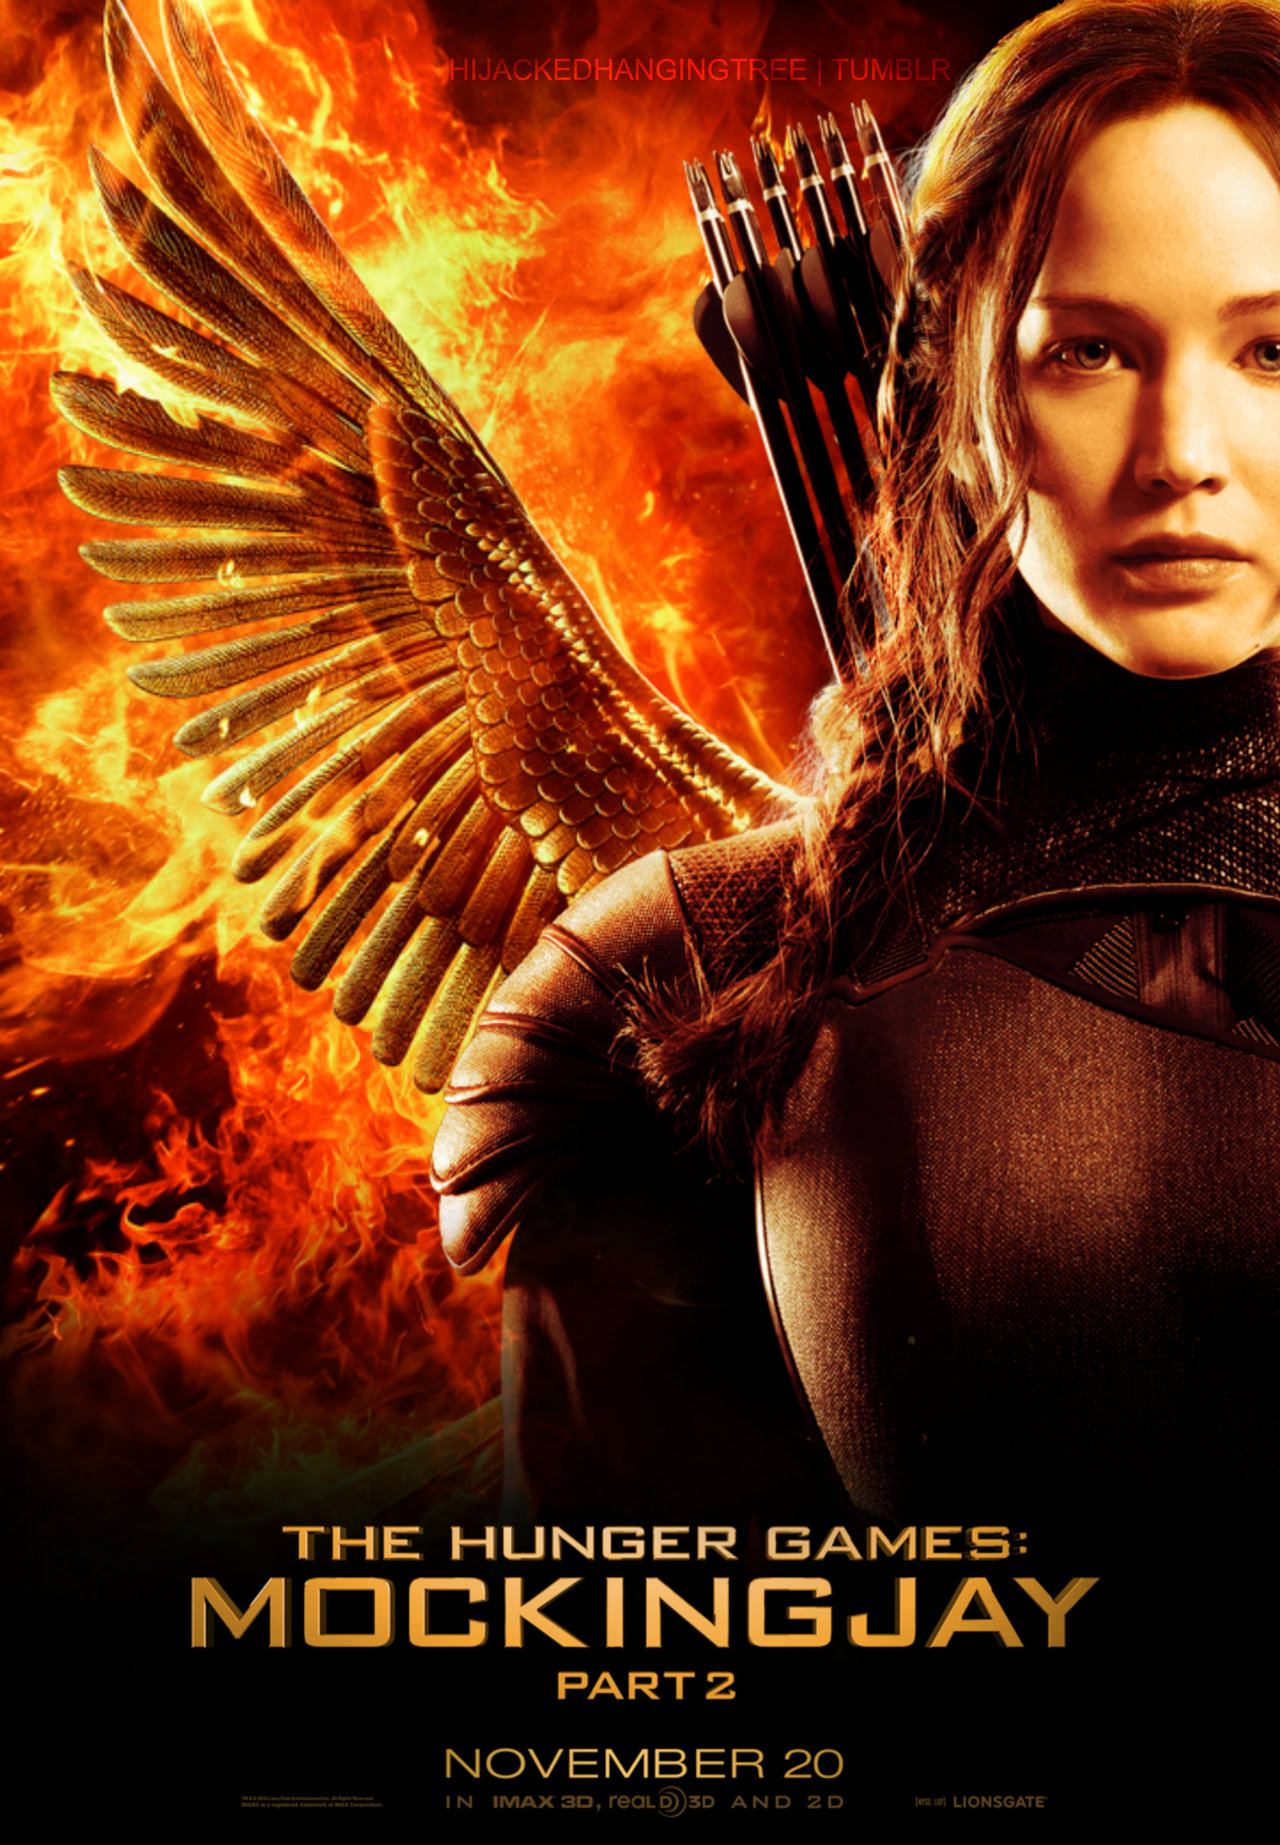 The Hunger Games: Mockingjay – Part 2 (2015) เกมล่าเกม 4: ม็อกกิ้งเจย์ พาร์ท 2